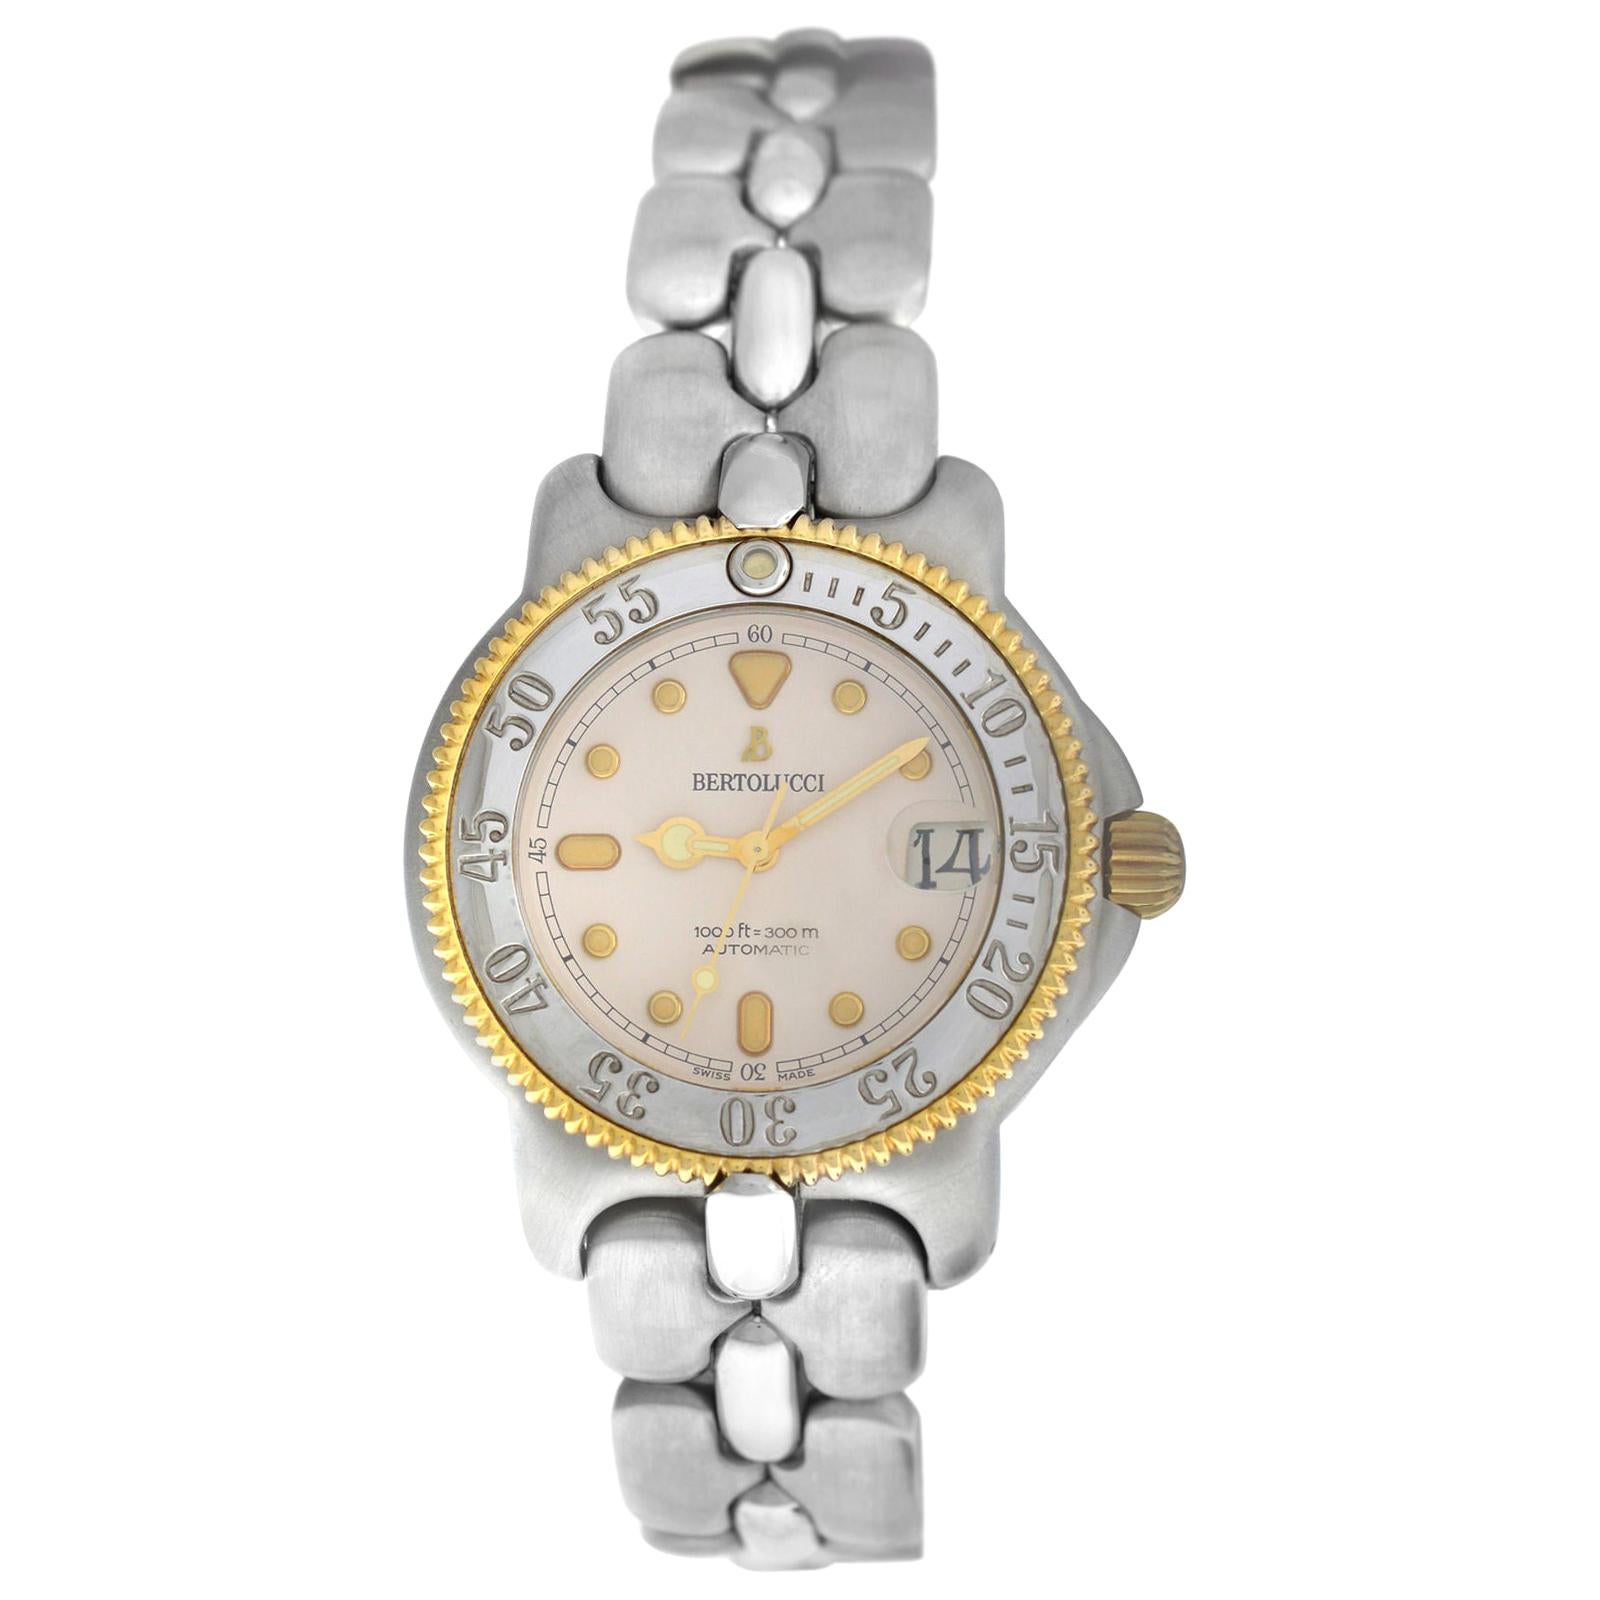 Bertolucci Pulchra Maris Diver 629 8055 49 Steel Gold Automatic Watch For Sale